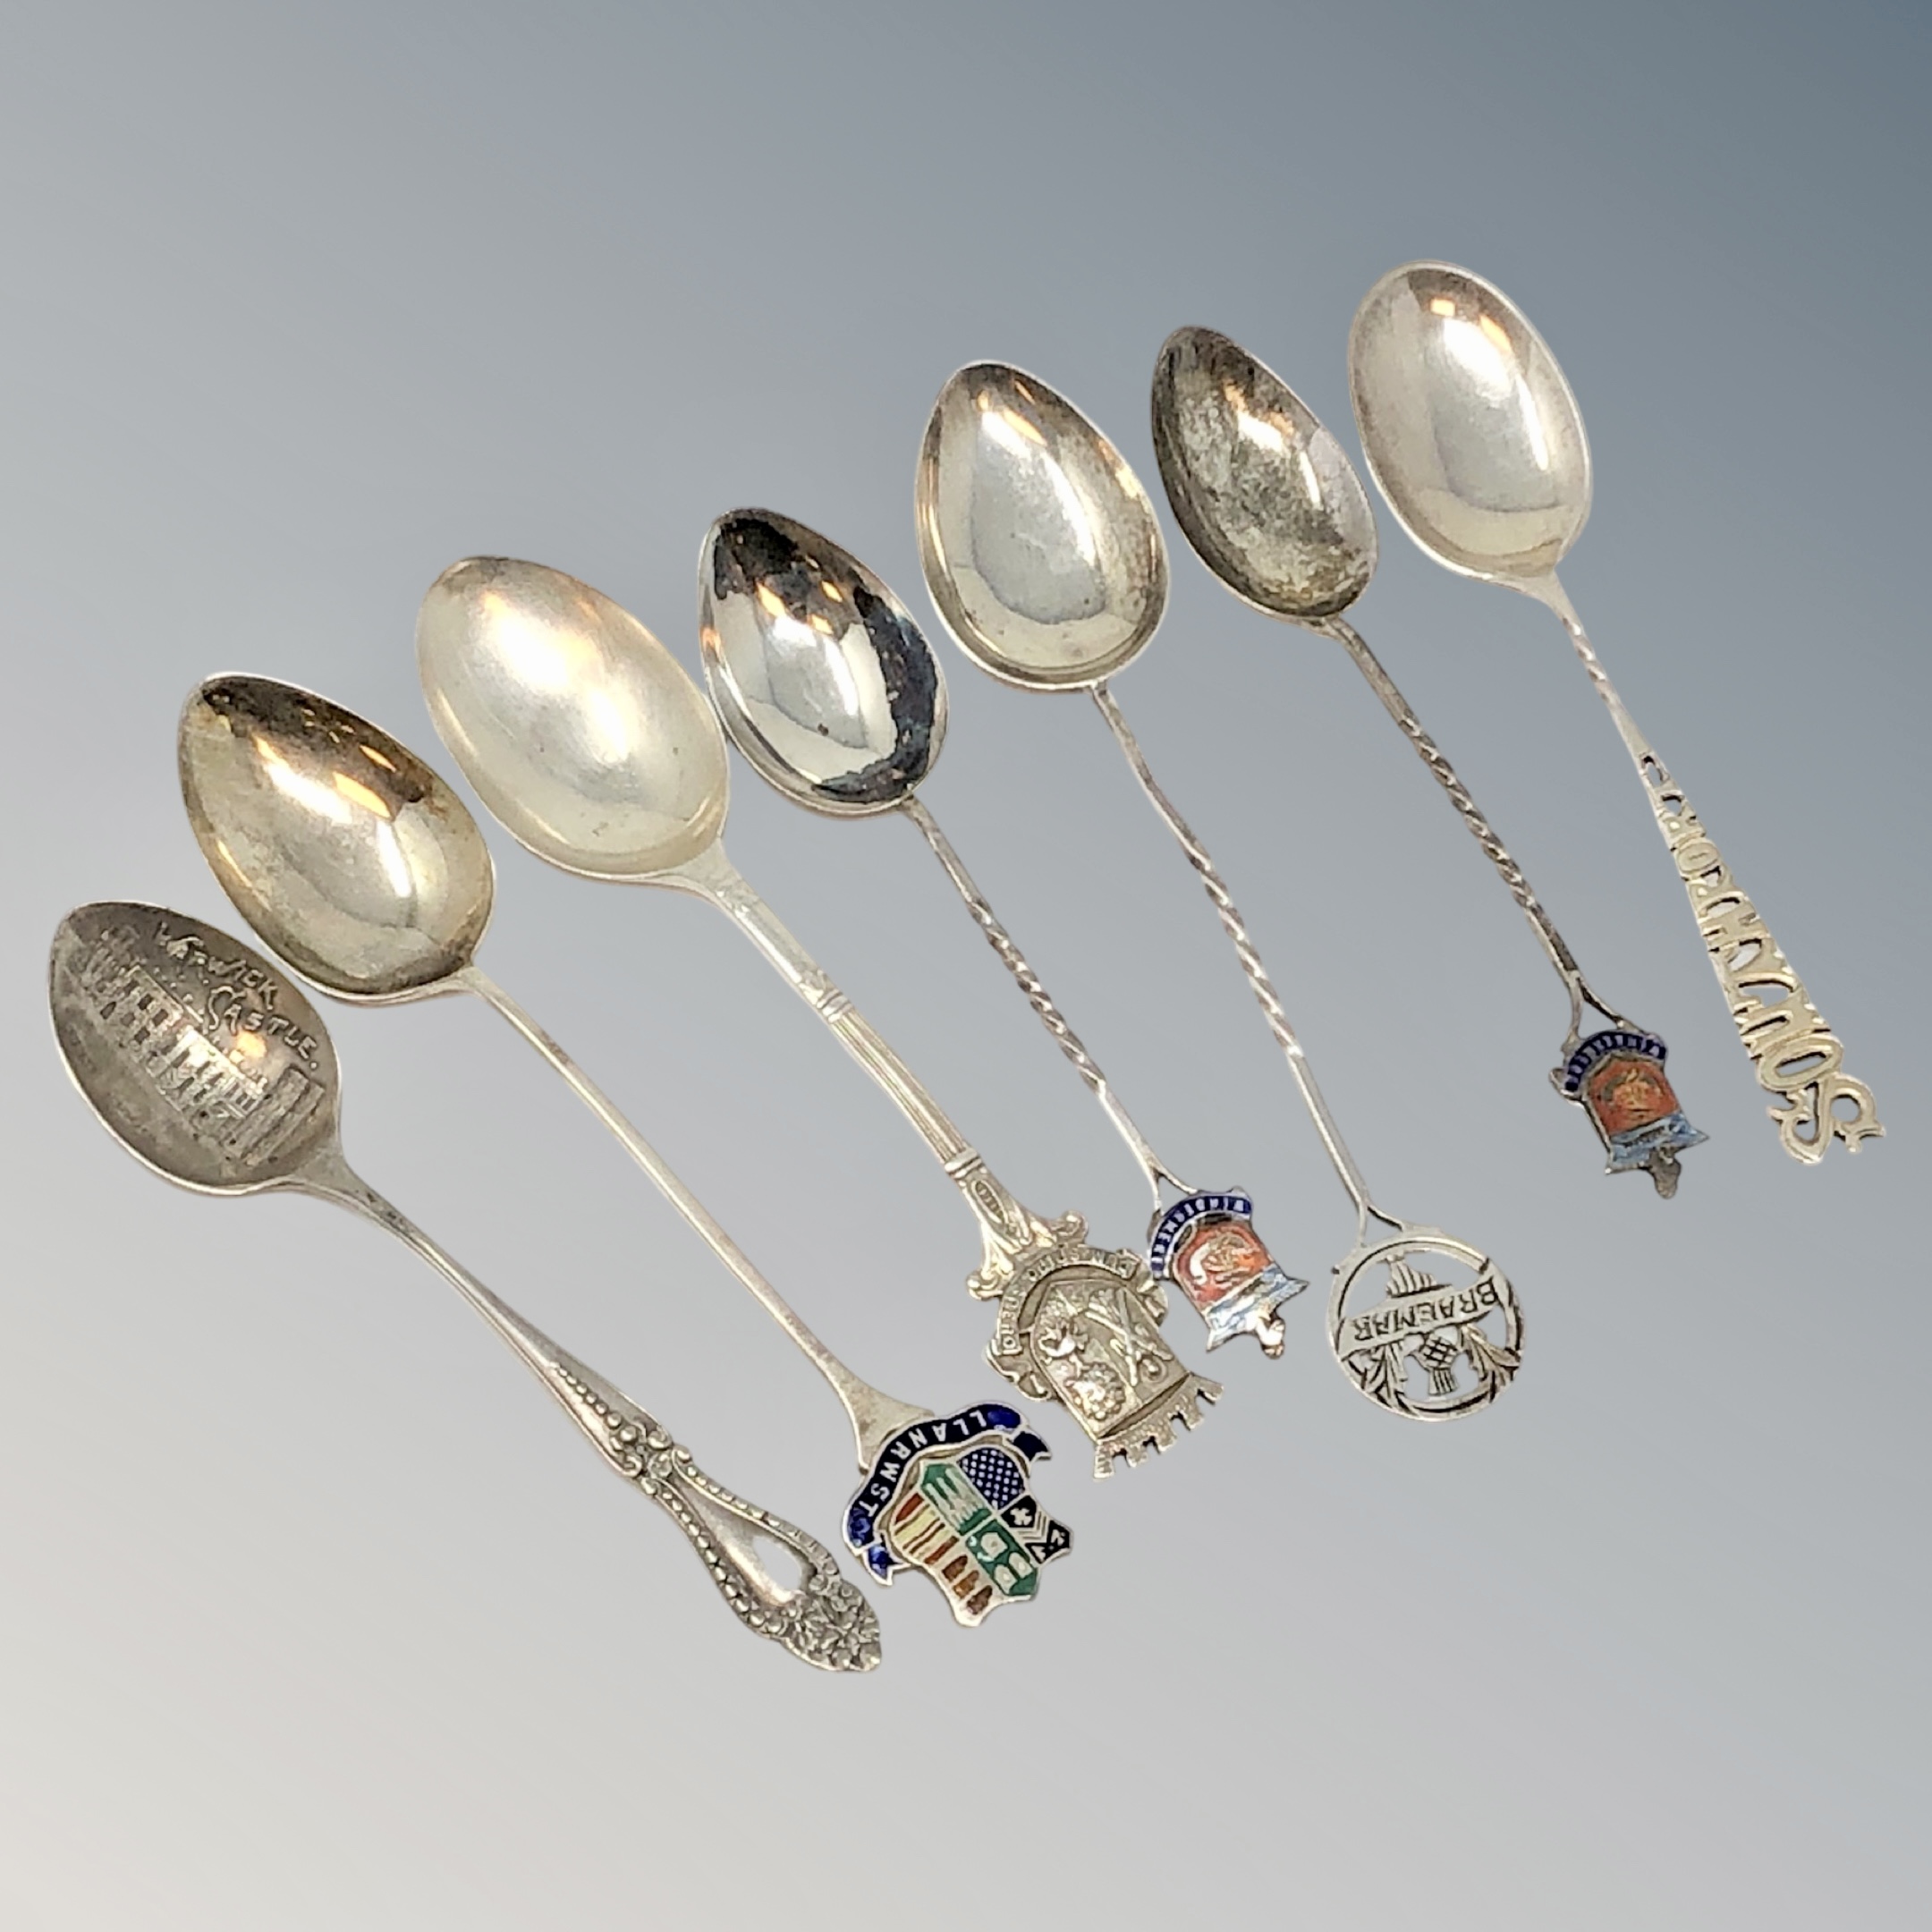 Seven silver spoons for Braemar, Southport, Windermere, Warwick Castle etc.